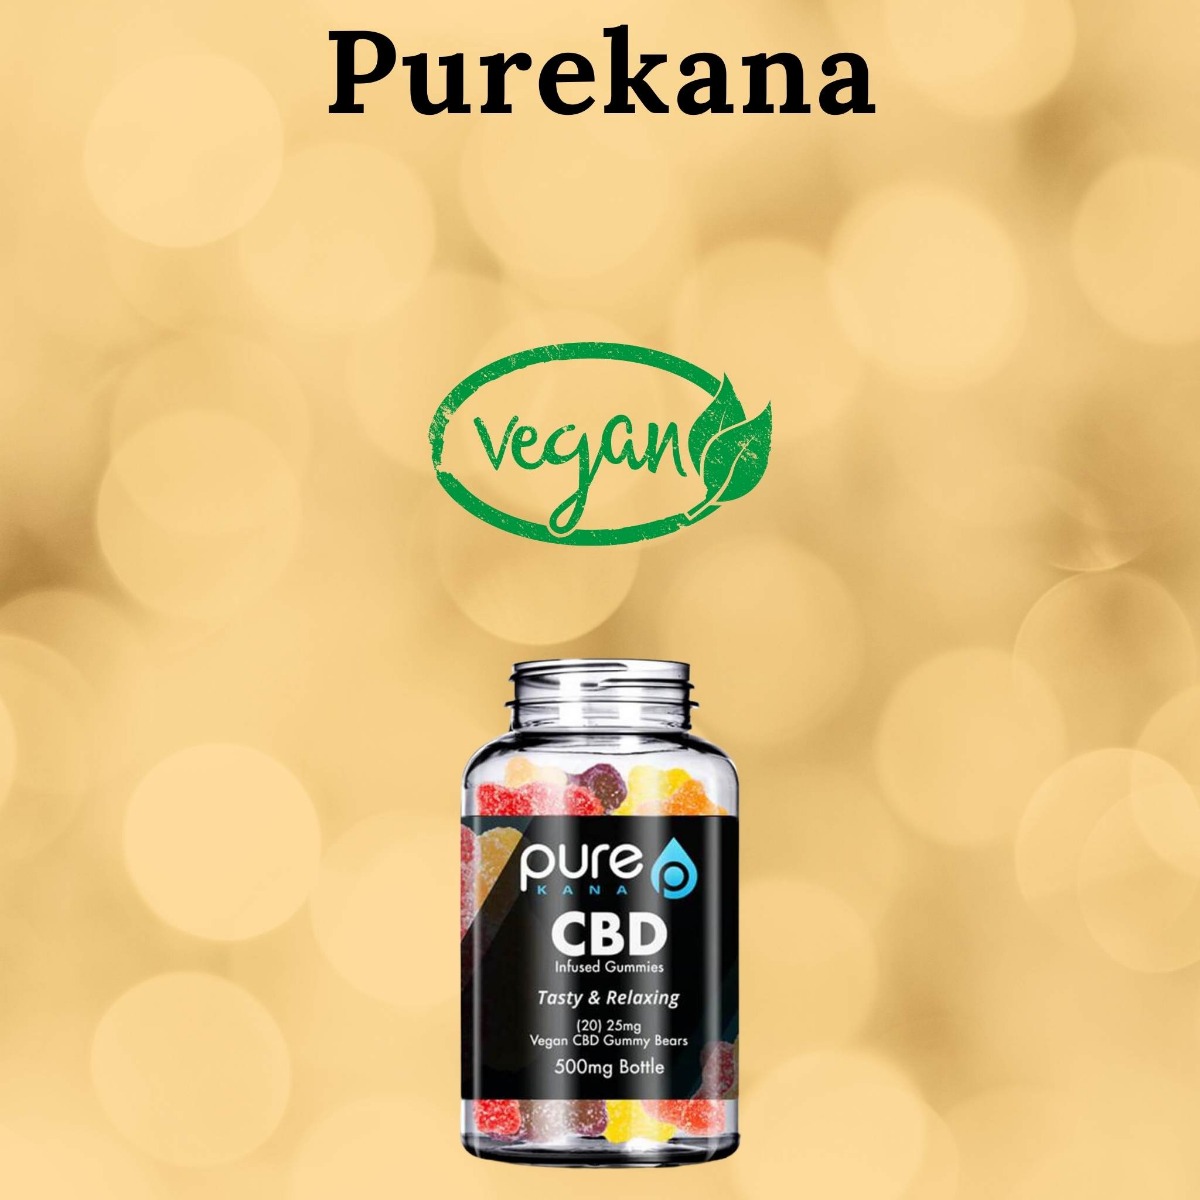 Purekana cbd oil bottle filled with cbd pills